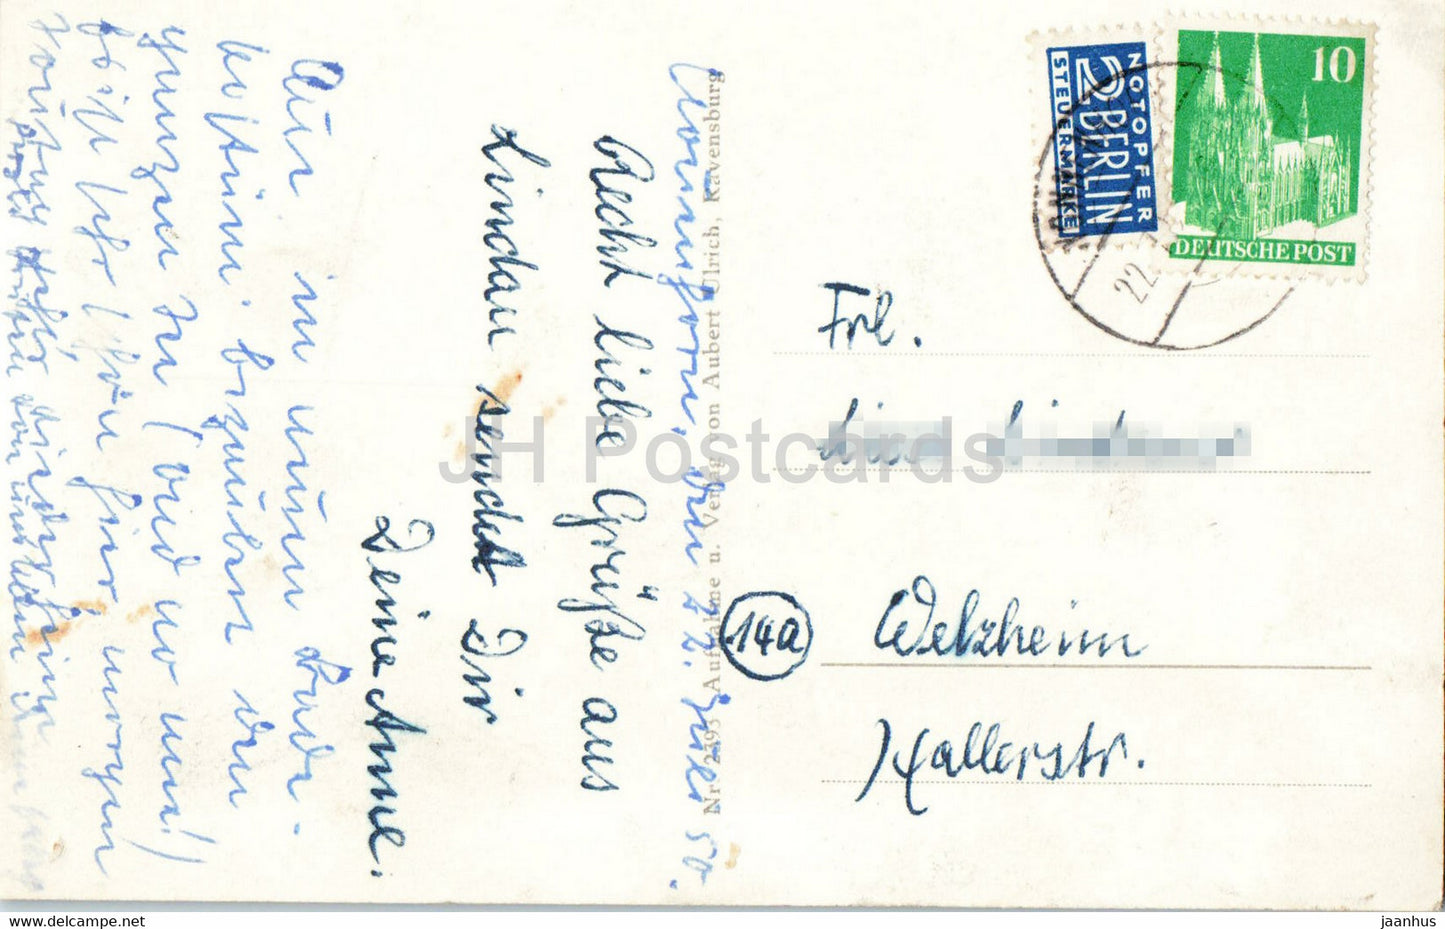 Lindau i Bodensee - Hafendamm - navire - phare - carte postale ancienne - 1950 - Allemagne - utilisé